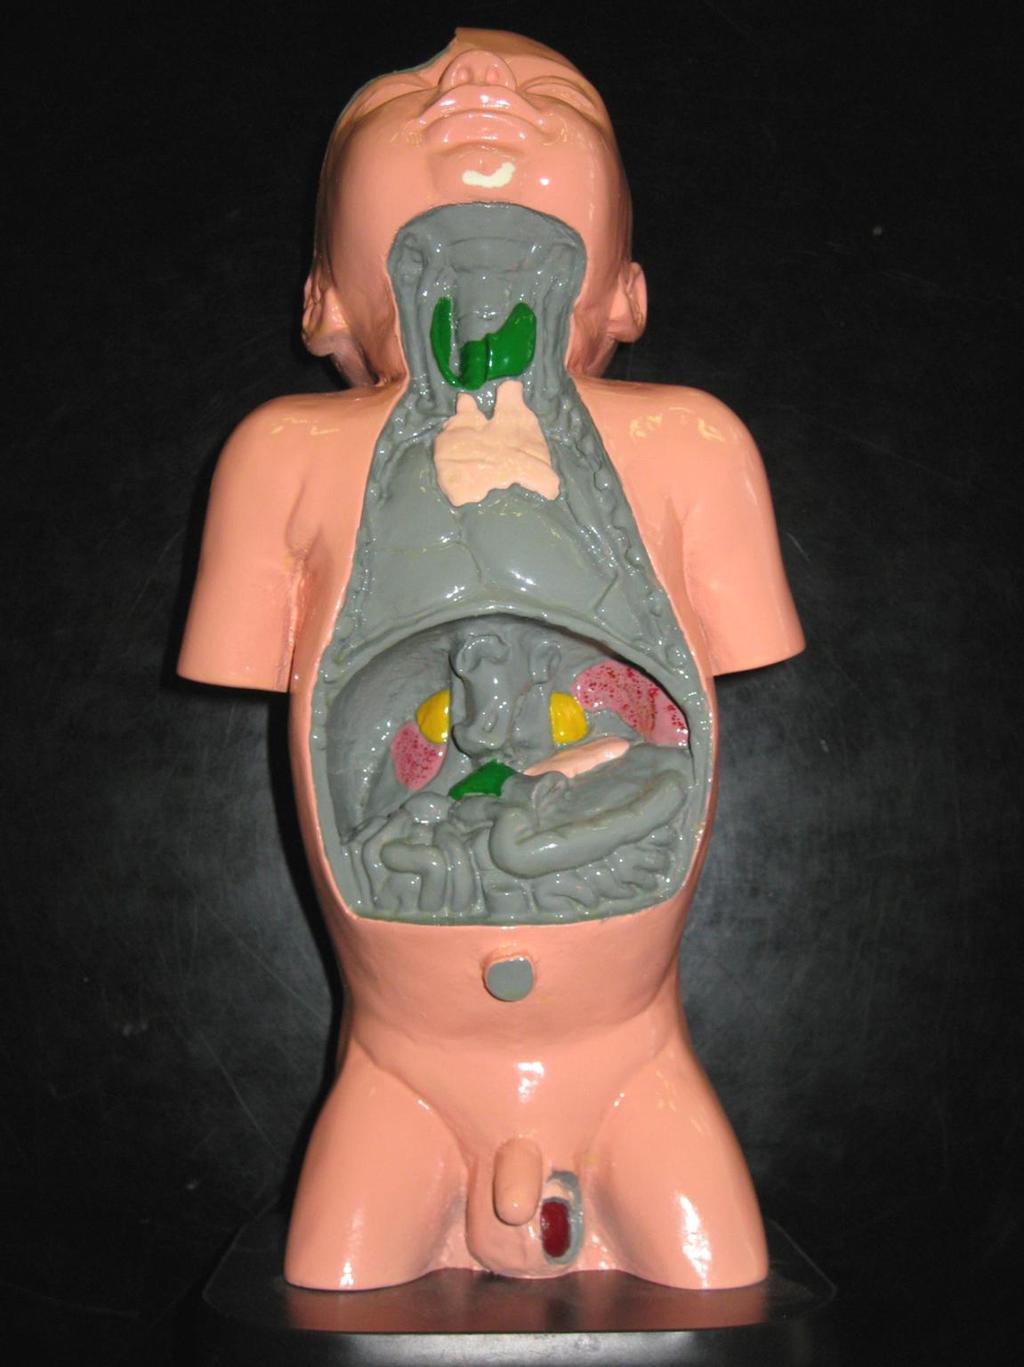 Male Infant Model